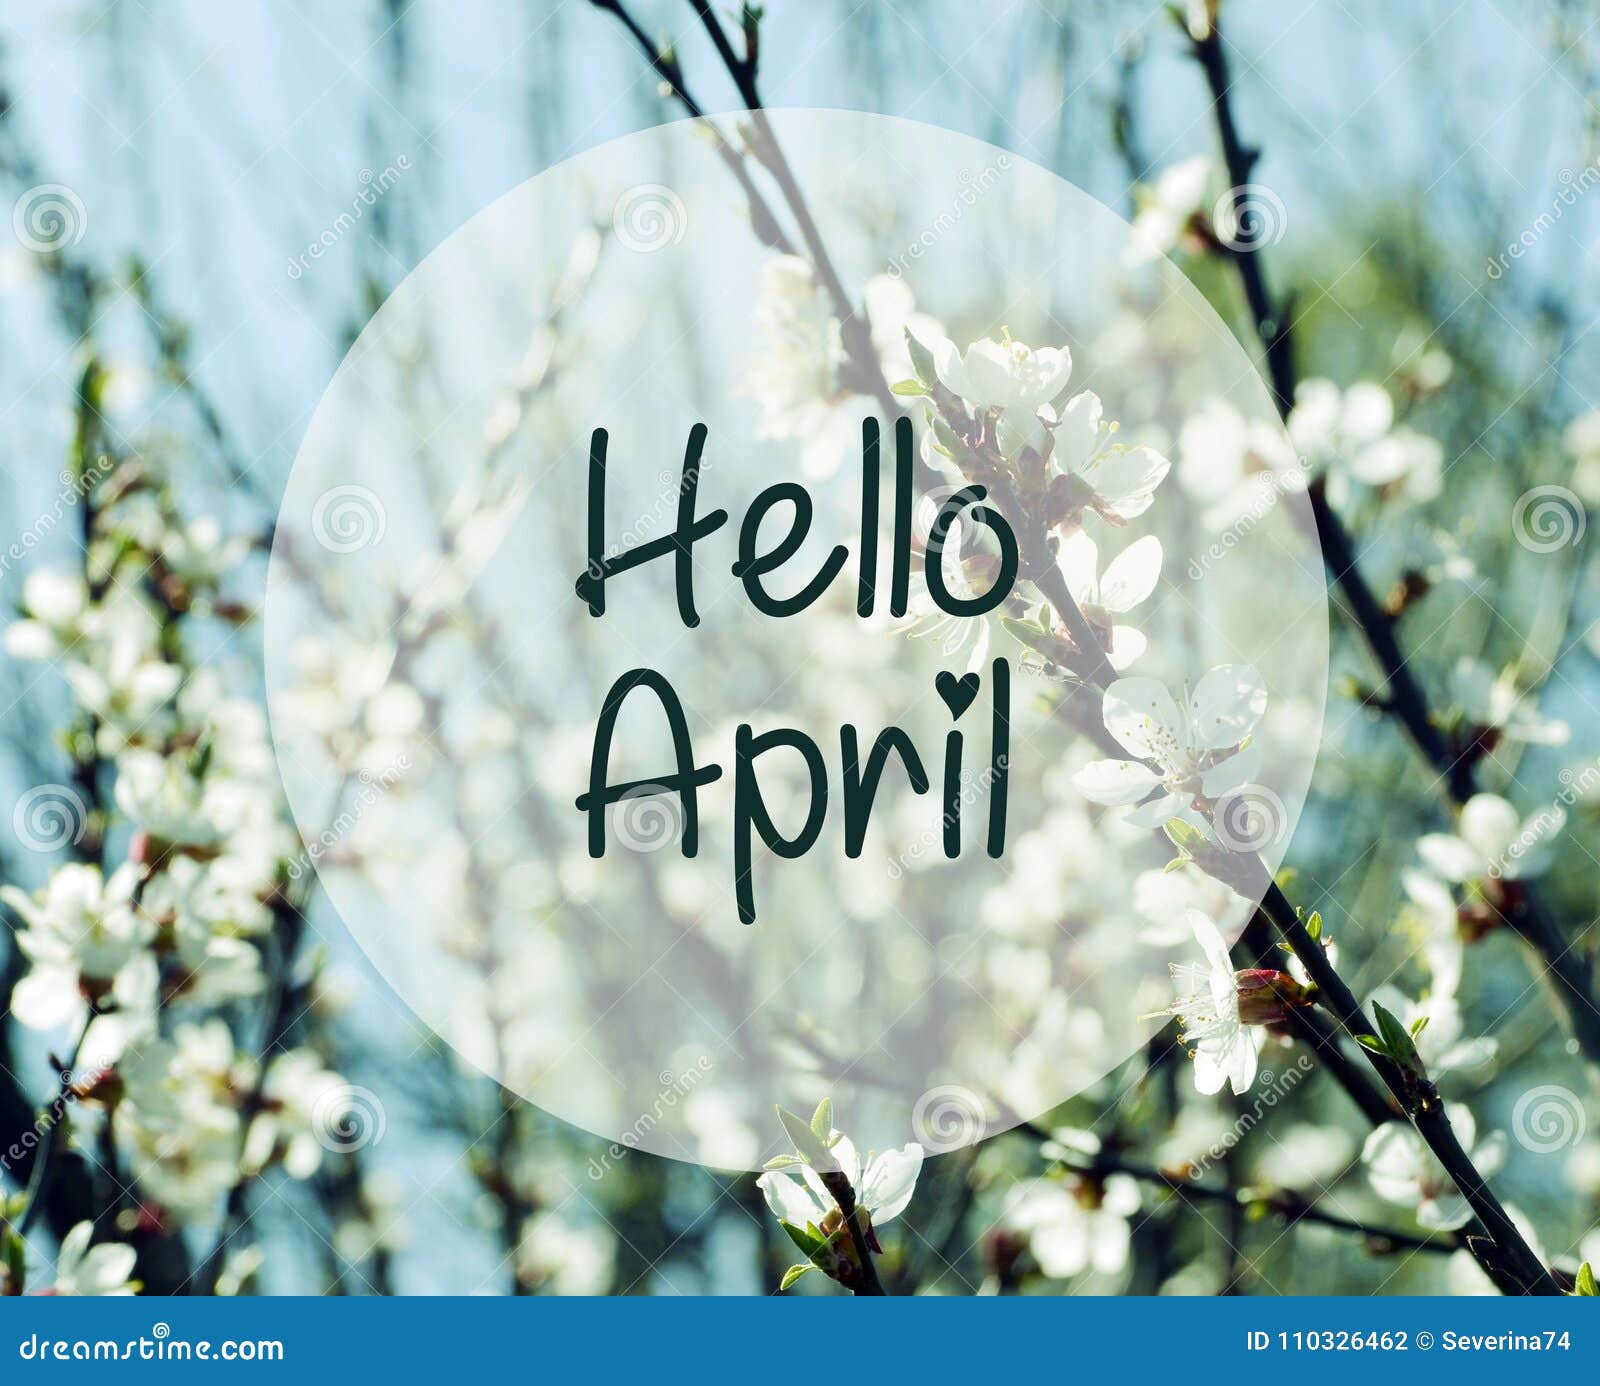 Здравствуй апрель картинки красивые. Здравствуй апрель. Здравствуй апрель фото. Да здравствует апрель картинки. Hello April.